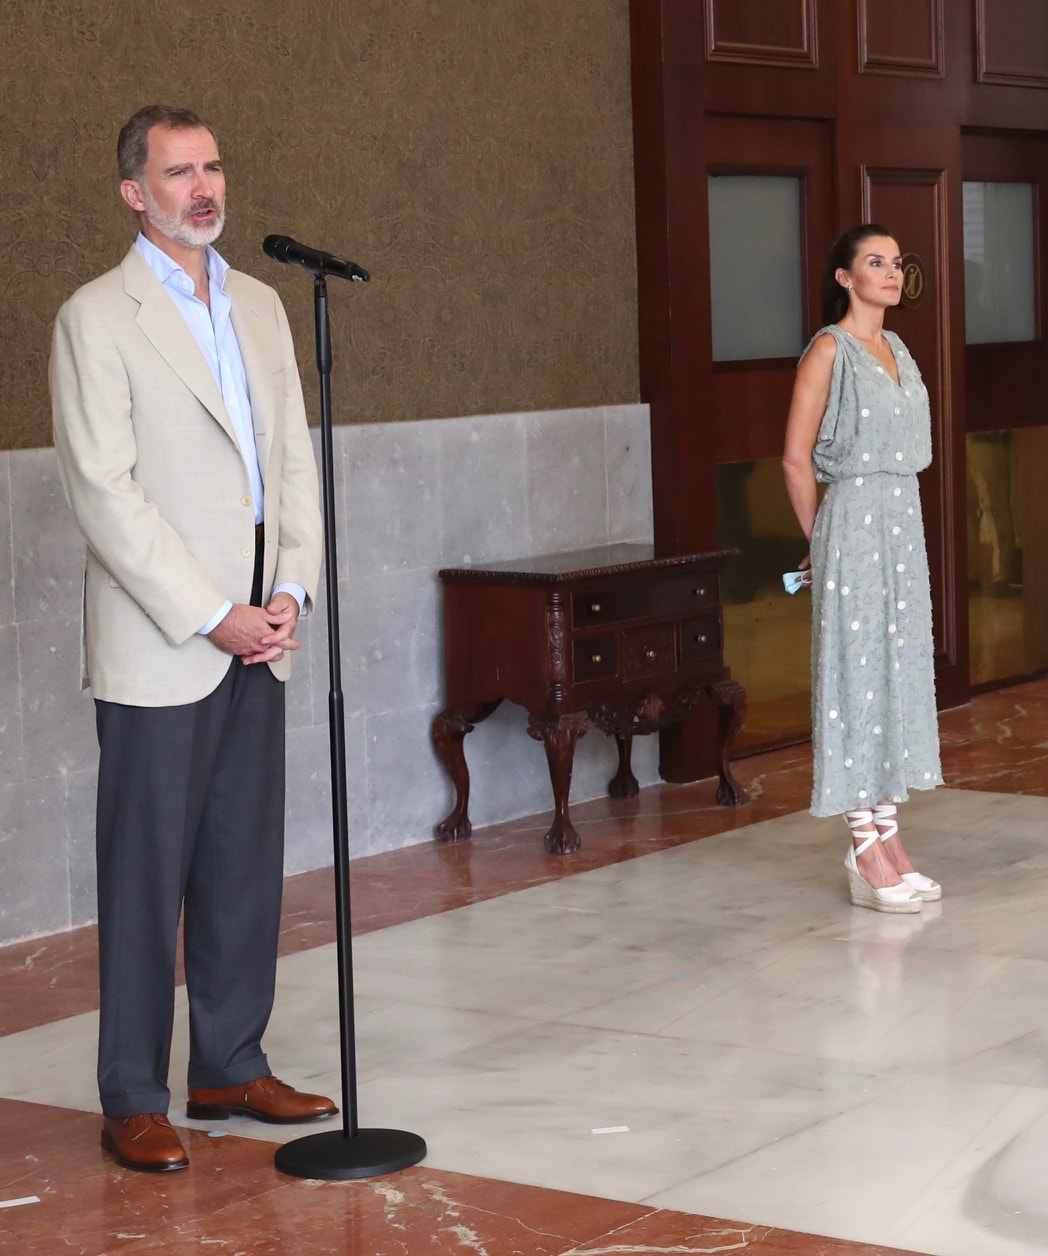 King Felipe Vi and Queen Letizia visit the Santa Catalina Royal Hideaway Hotel in Gran Canaria on 23 June 2020